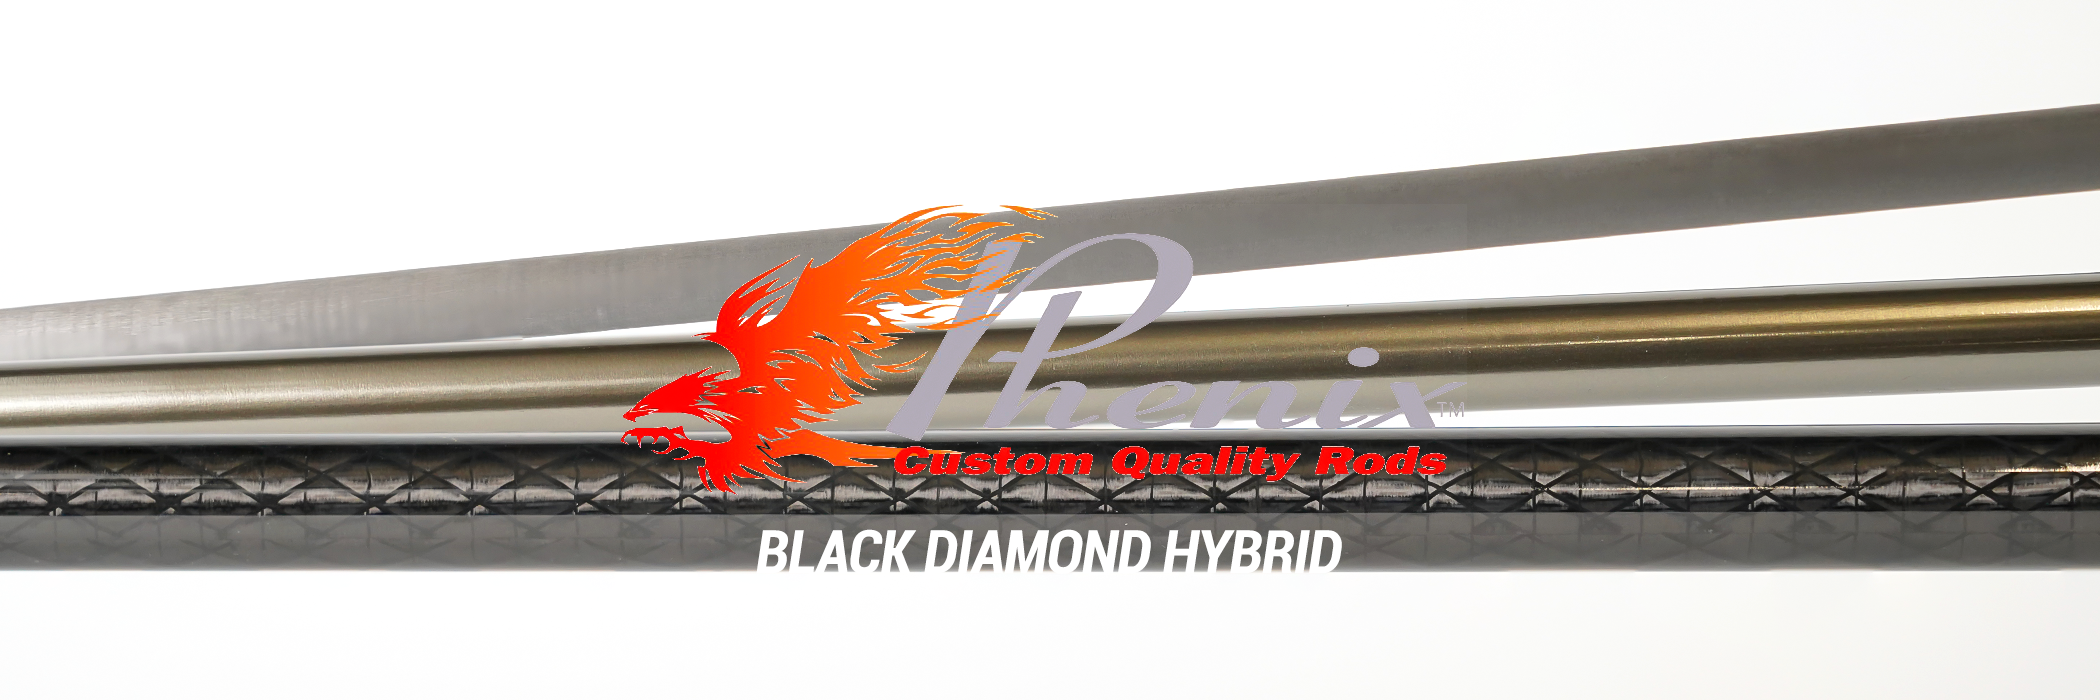 Phenix - Black Diamond Hybrid